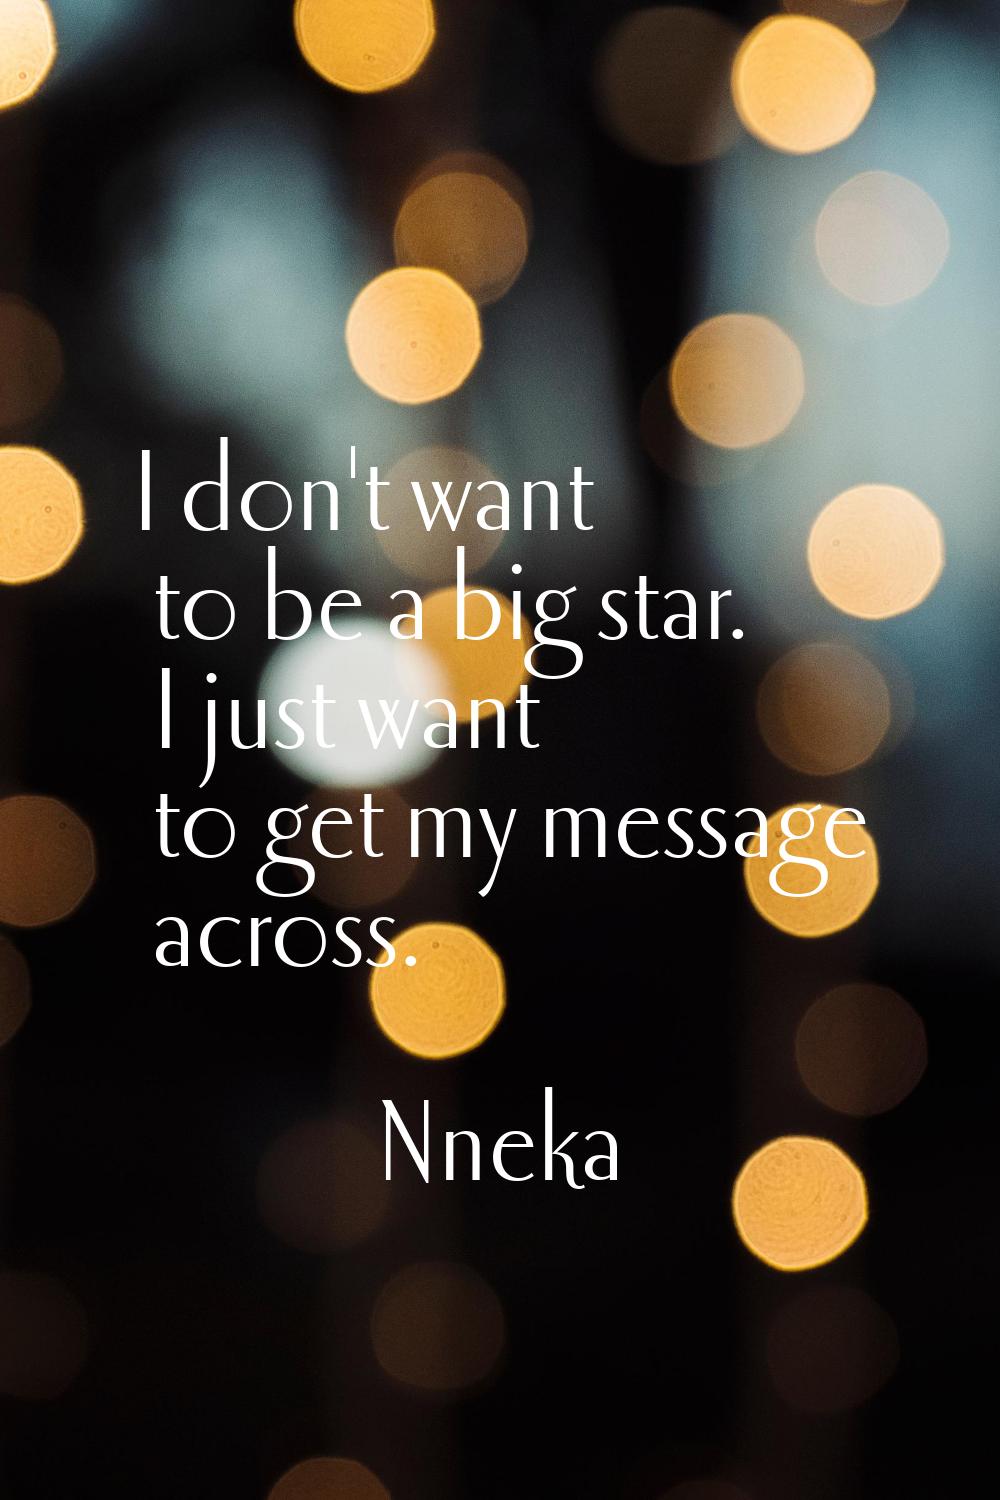 I don't want to be a big star. I just want to get my message across.